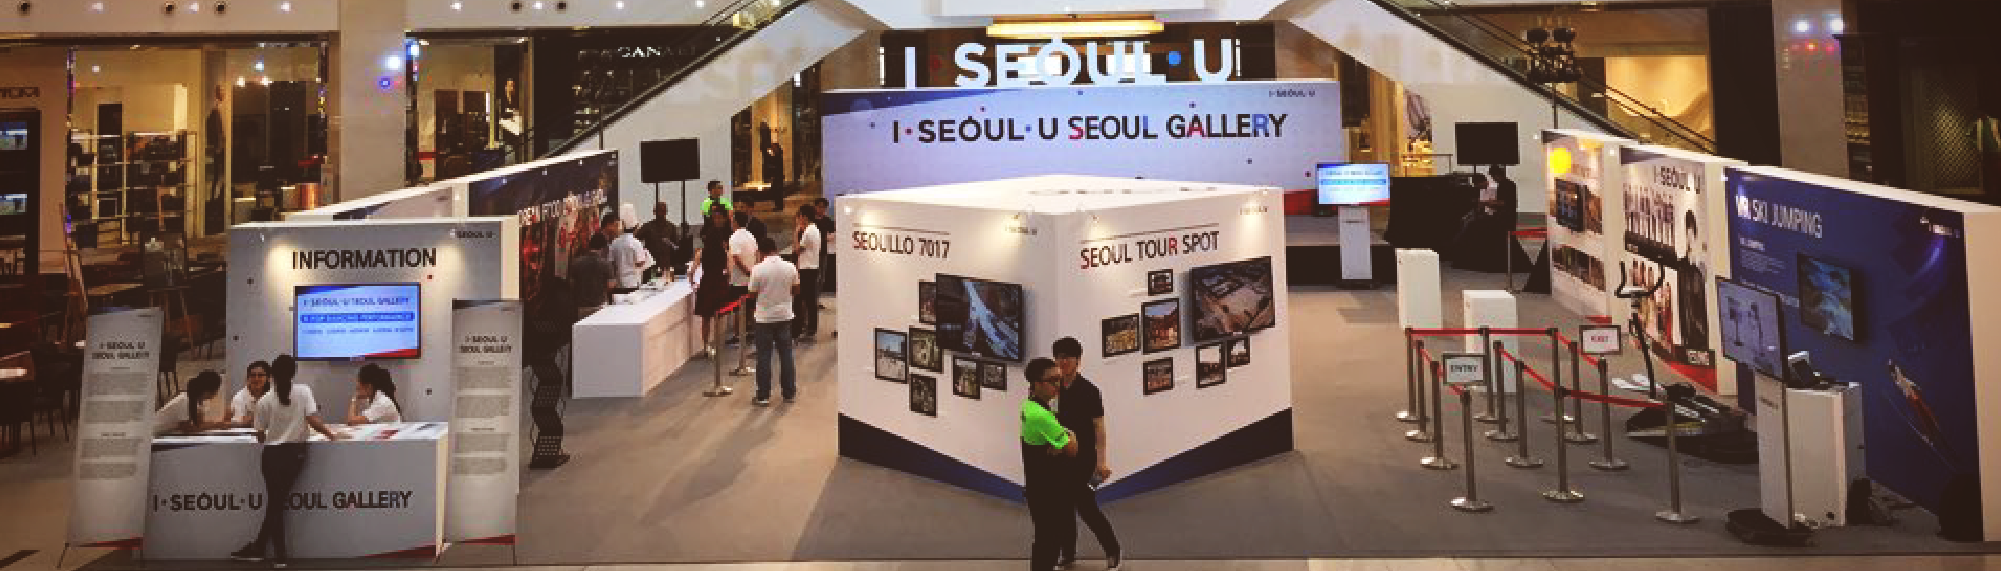 I Seoul U Seoul Gallery in Malaysia